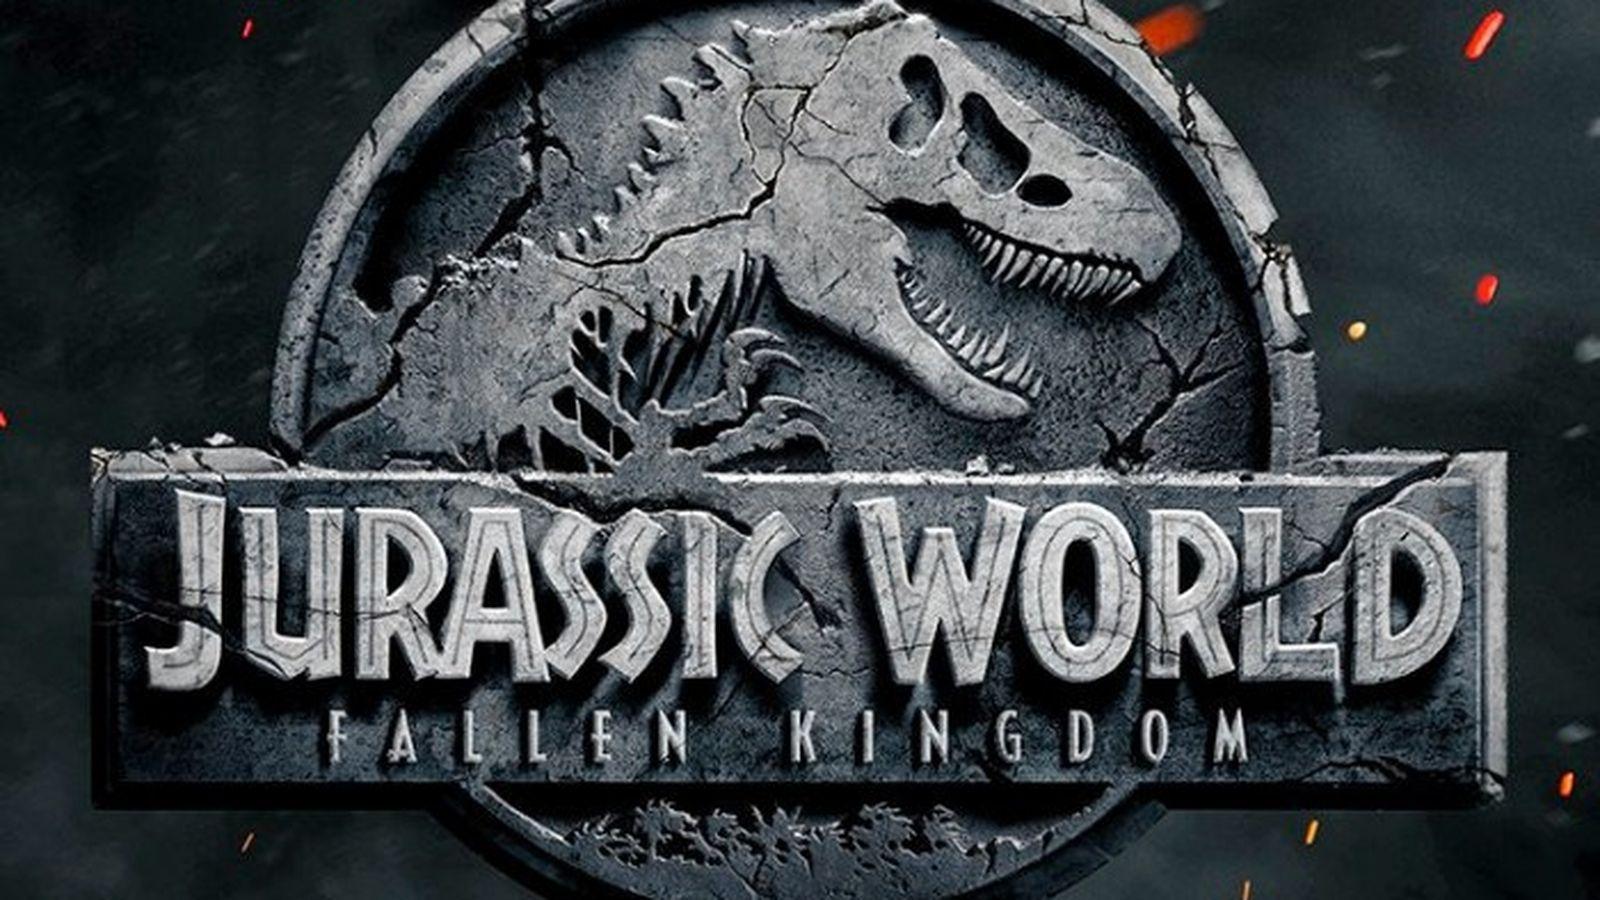 The Jurassic World: Fallen Kingdom poster is just a single